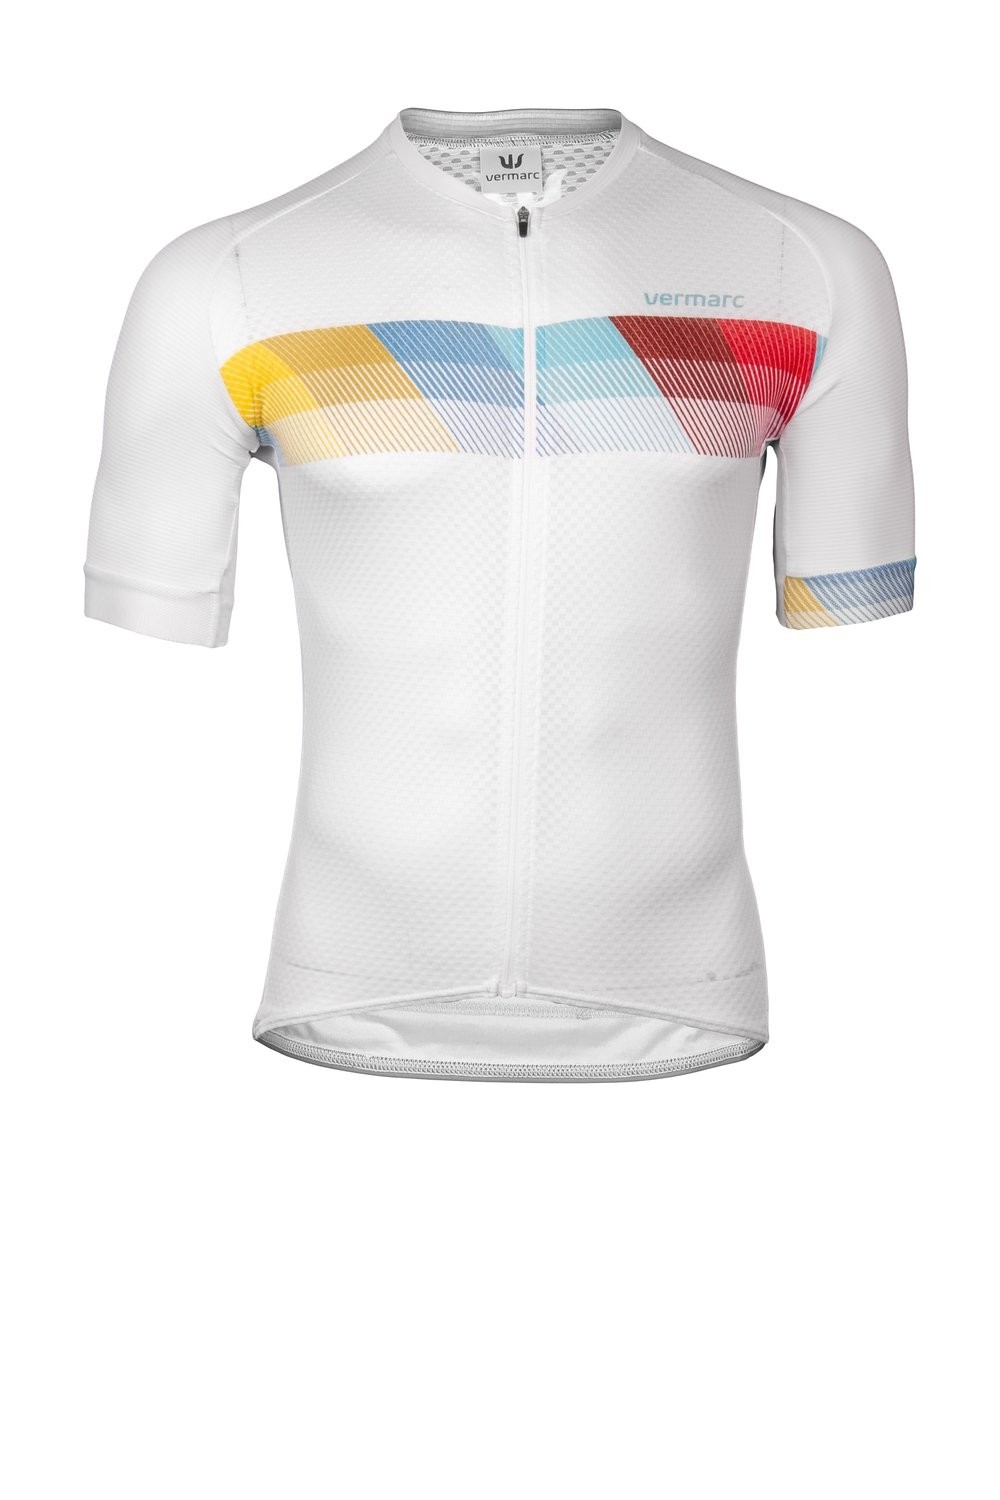 Vermarc chroma summer maillot de cyclisme manches courtes blanc